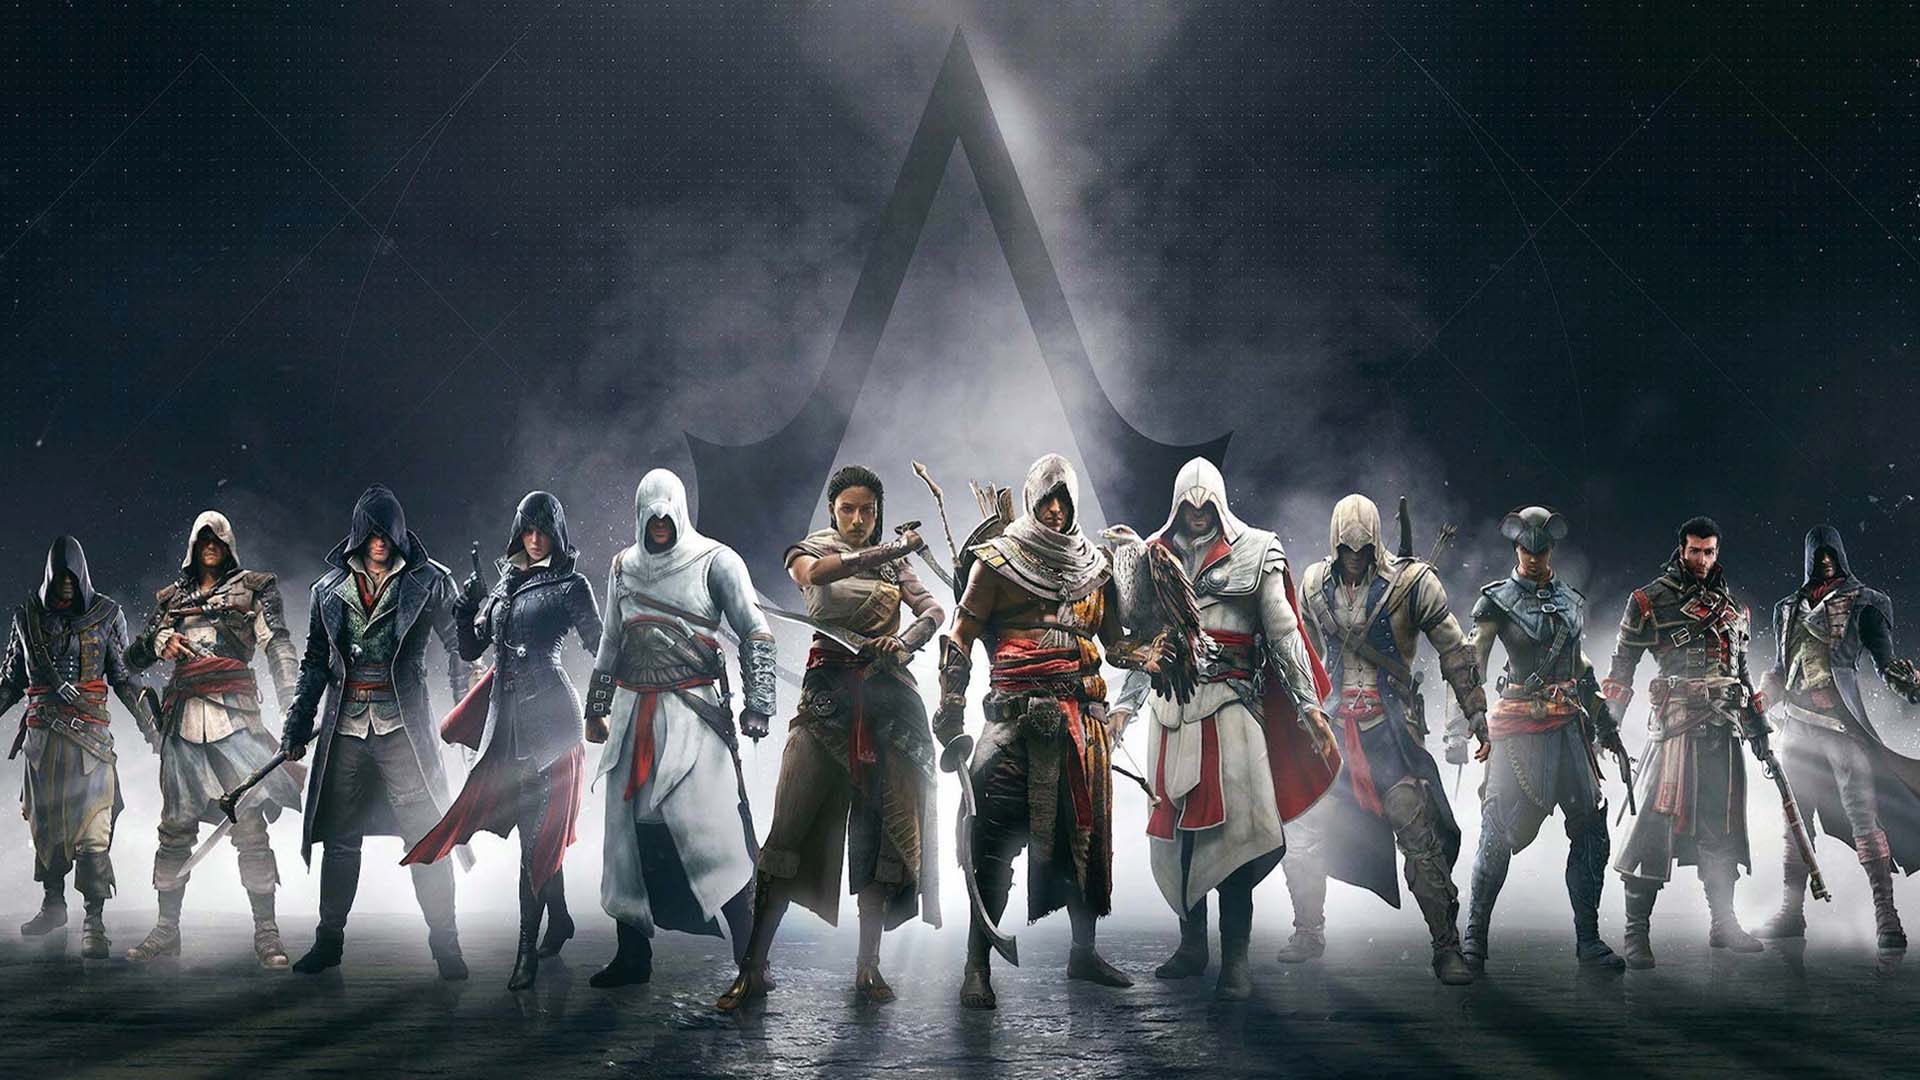  Assassin's Creed II: Platinum Hits Edition : UbiSoft:  Everything Else